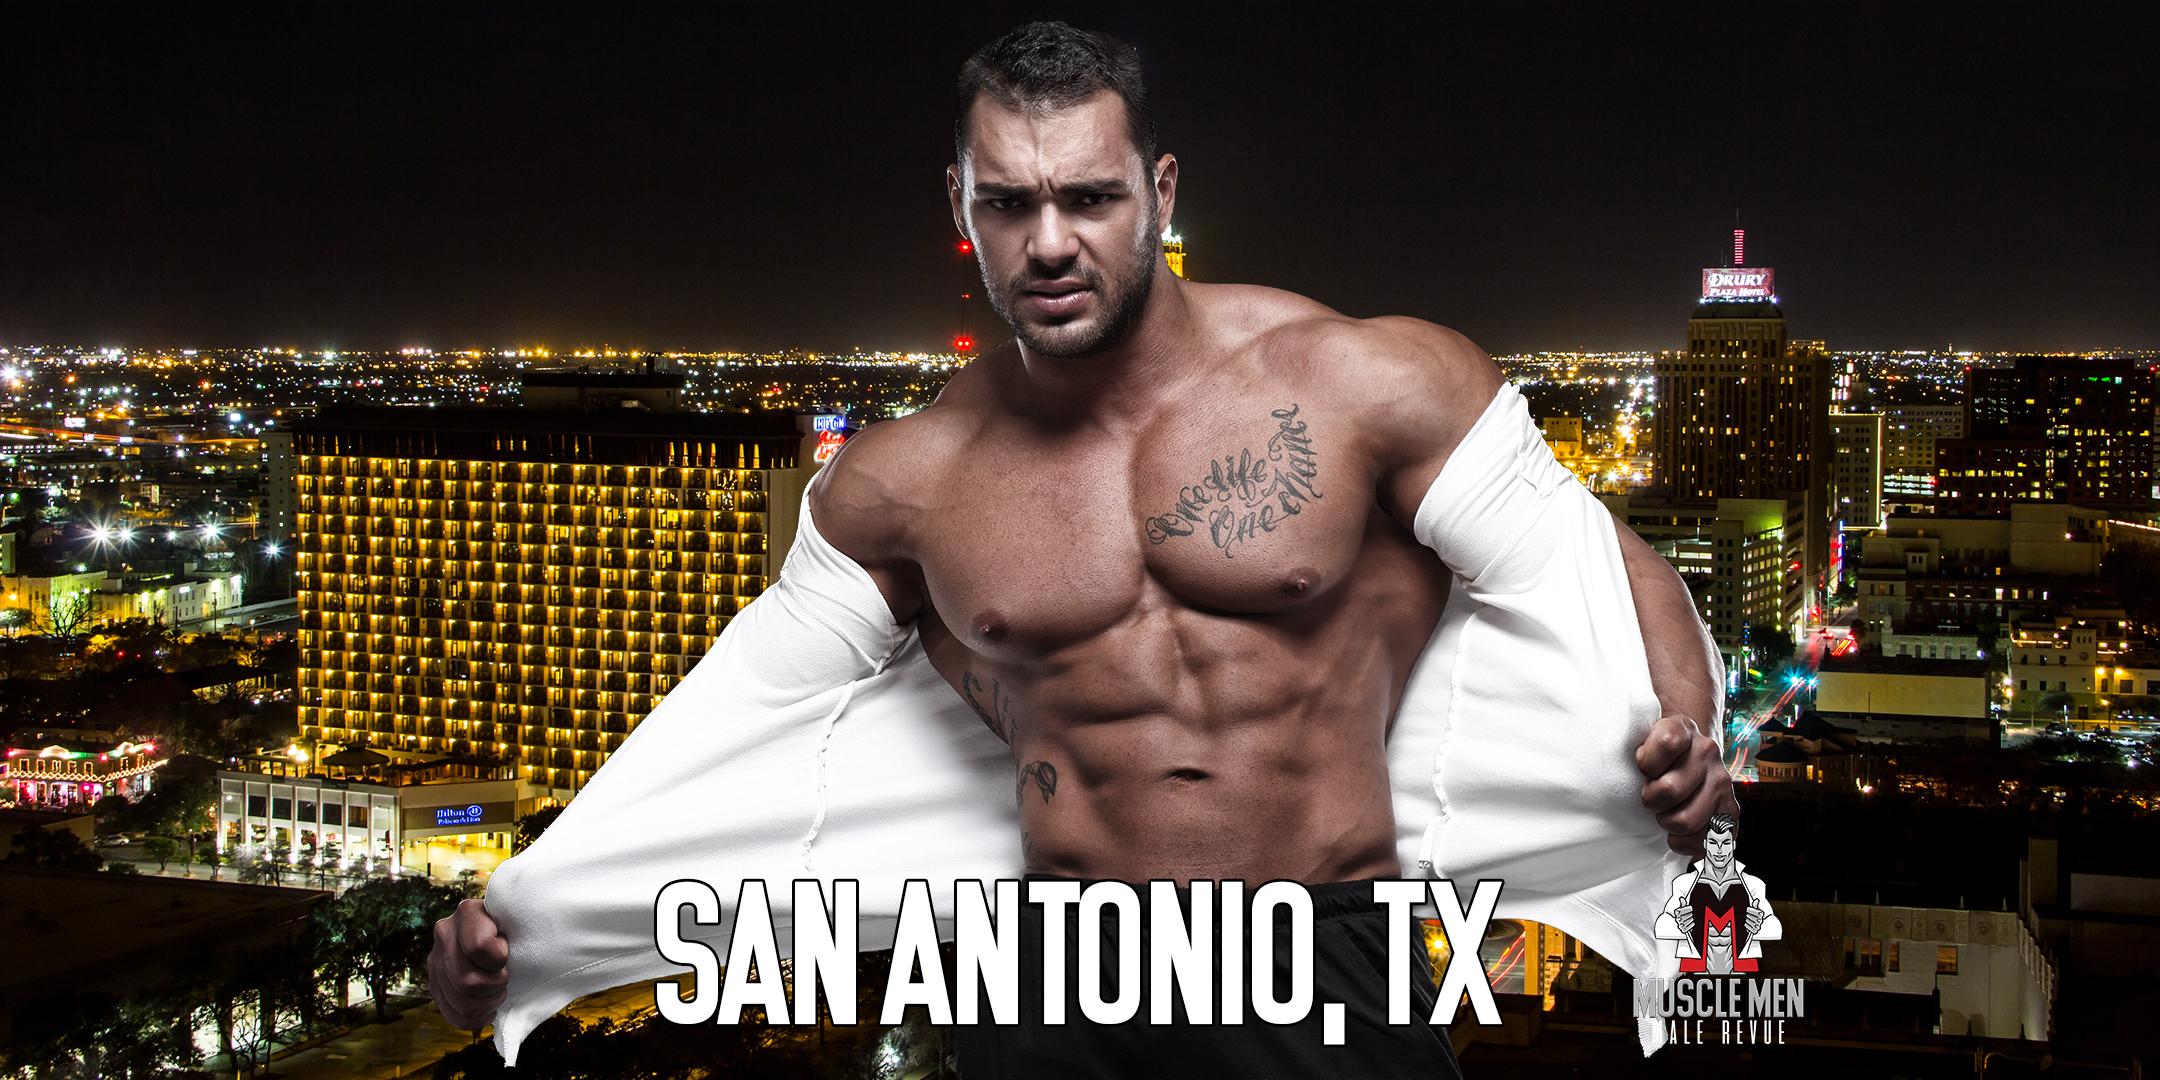 Muscle Men Male Strippers Revue Show & Male Strip club Shows San Antonio TX 8pm-10pm